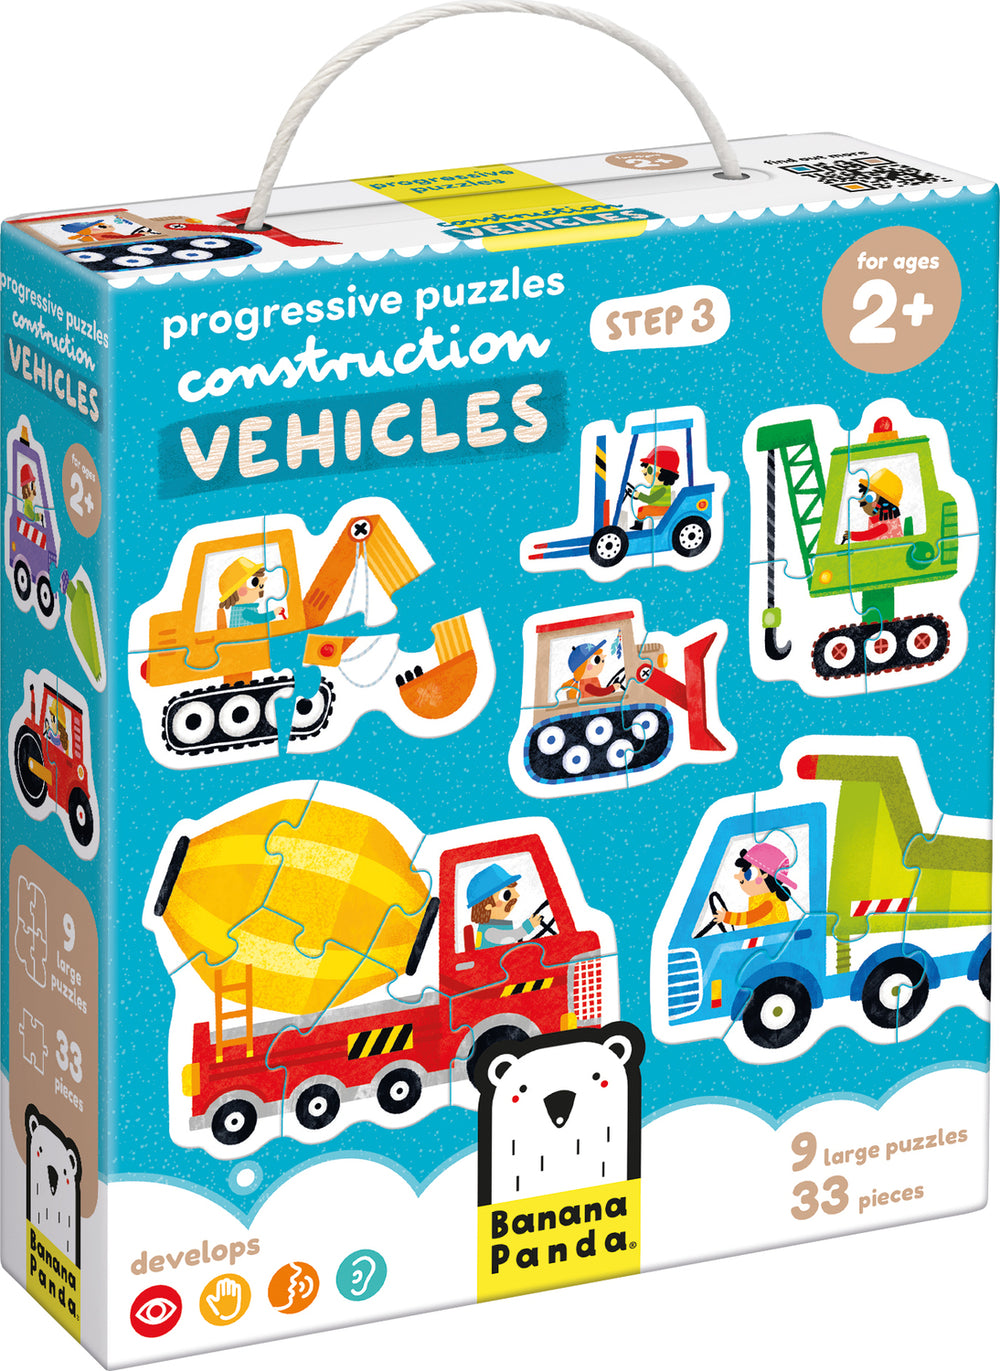 Progressive Puzzles Construction Vehicles